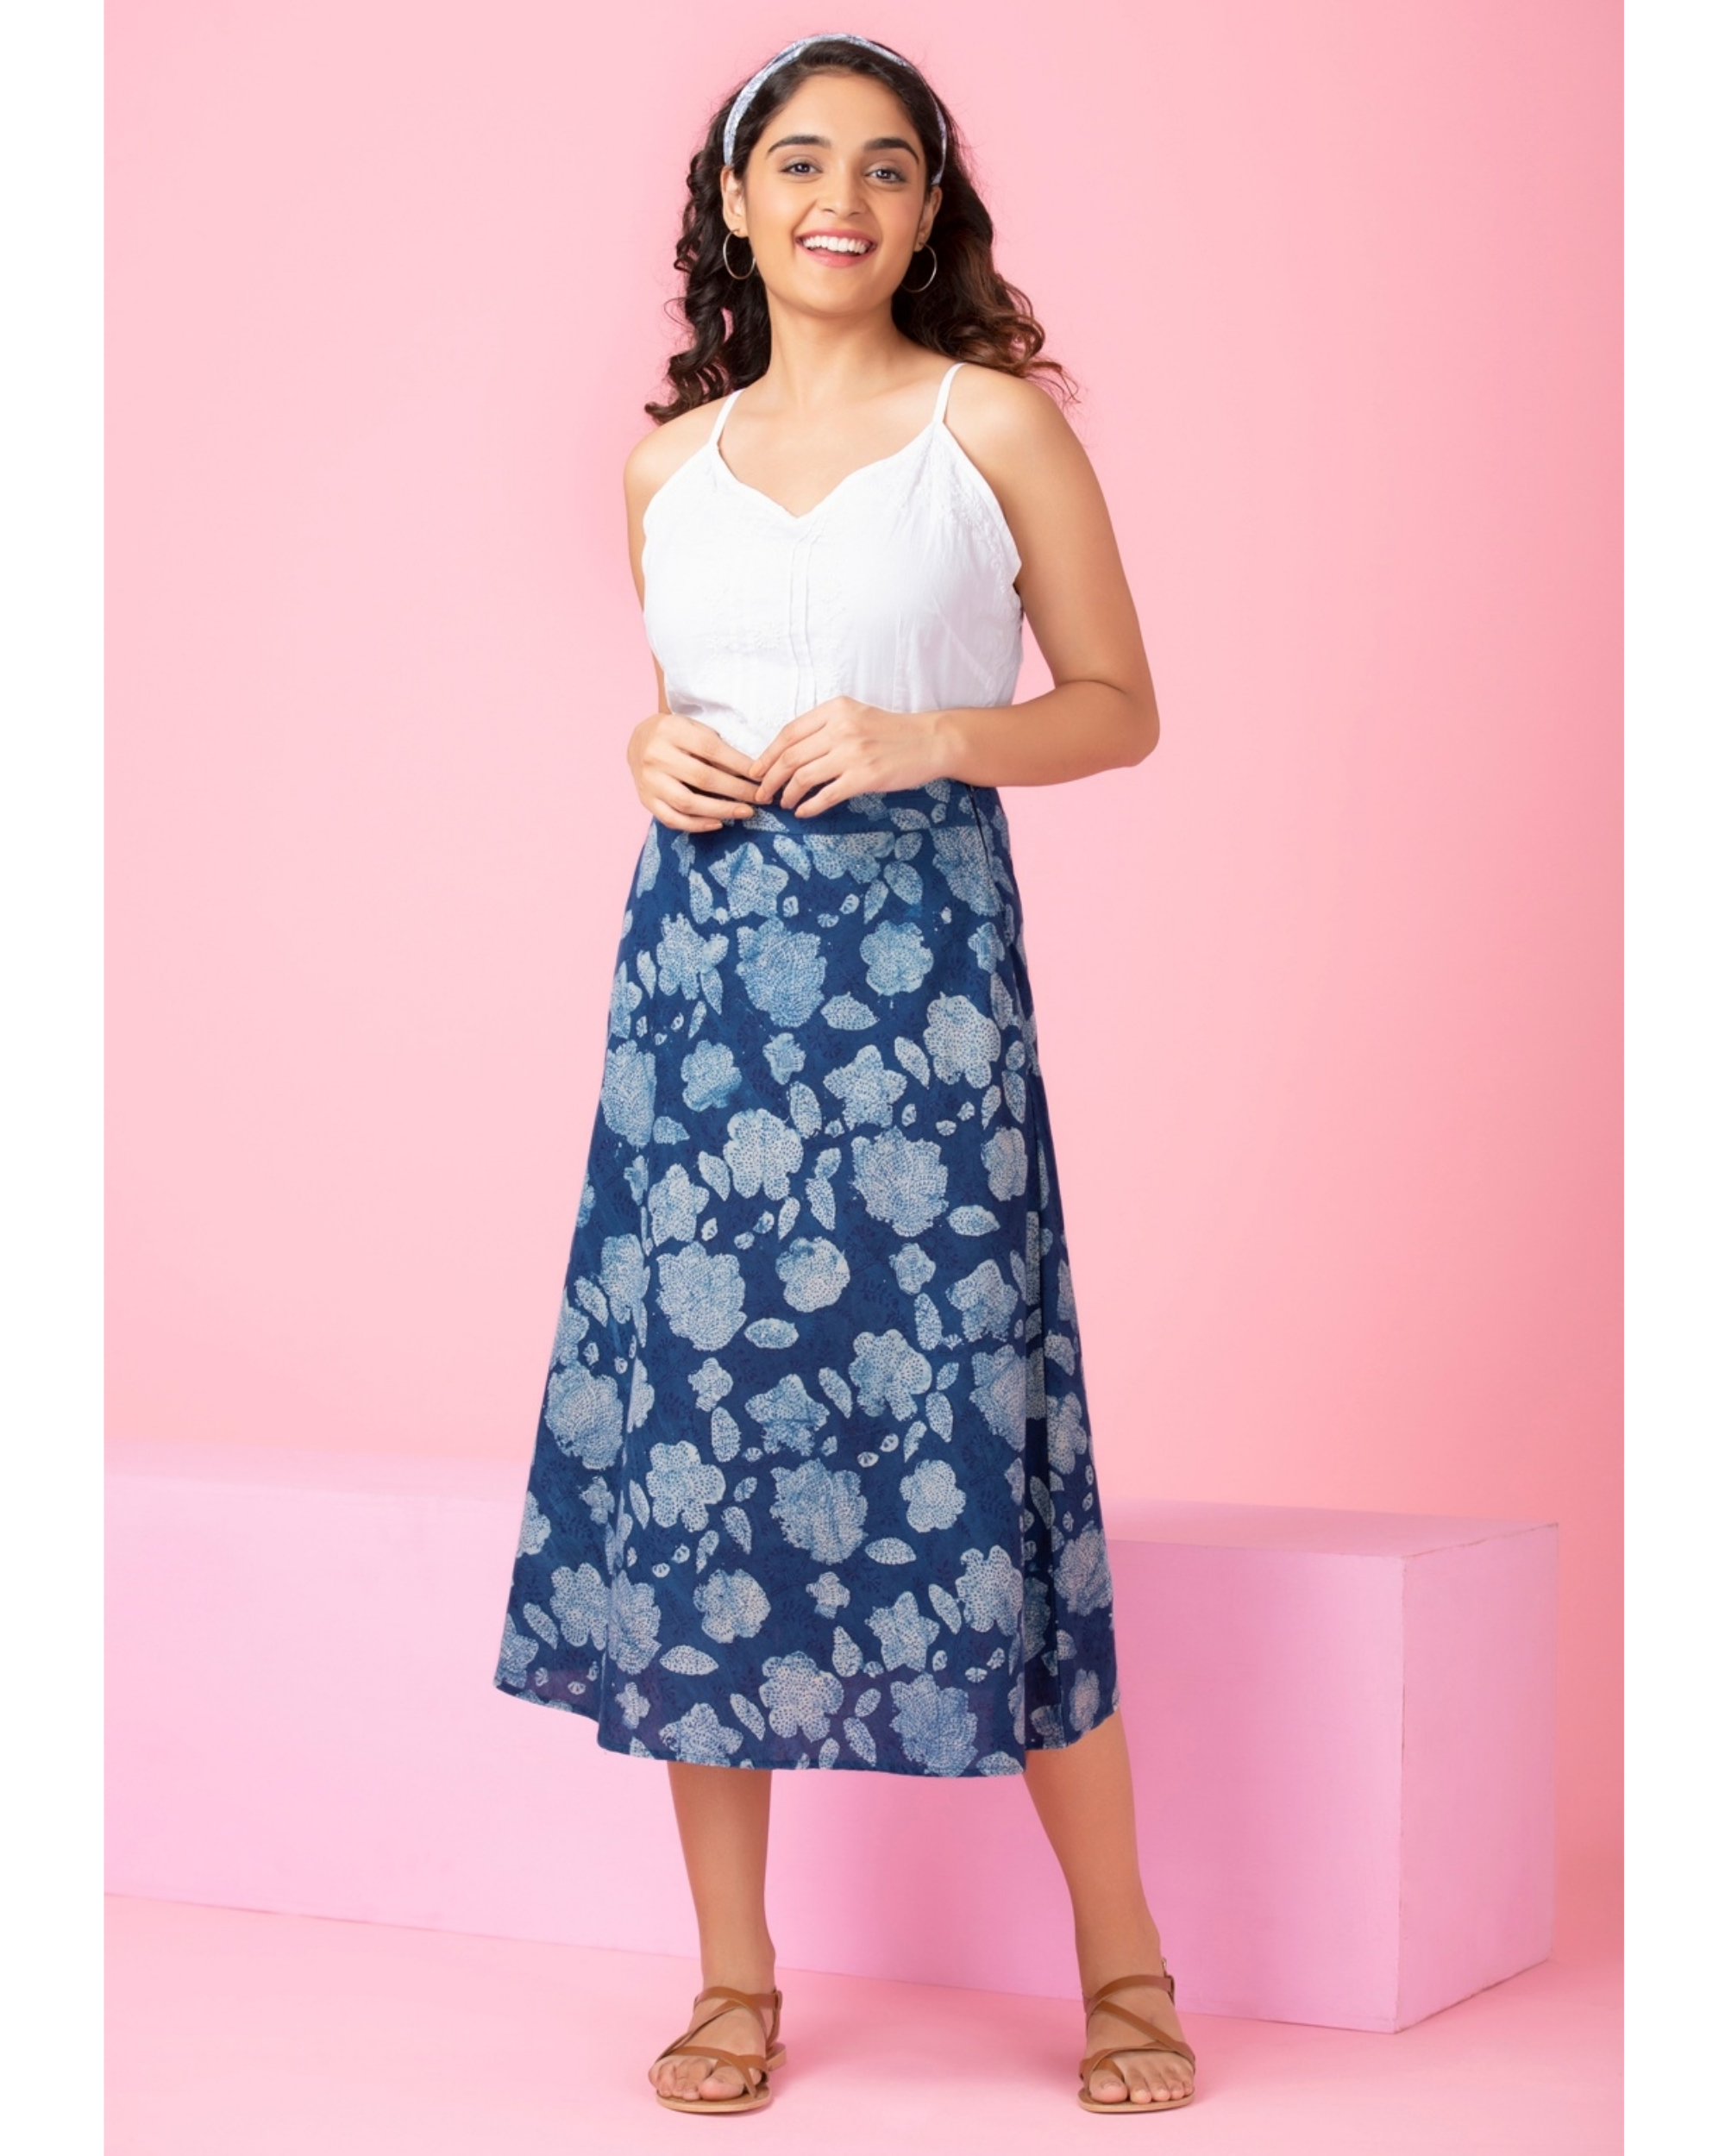 Cobalt blue floral printed skirt by Twirl Studio | The Secret Label